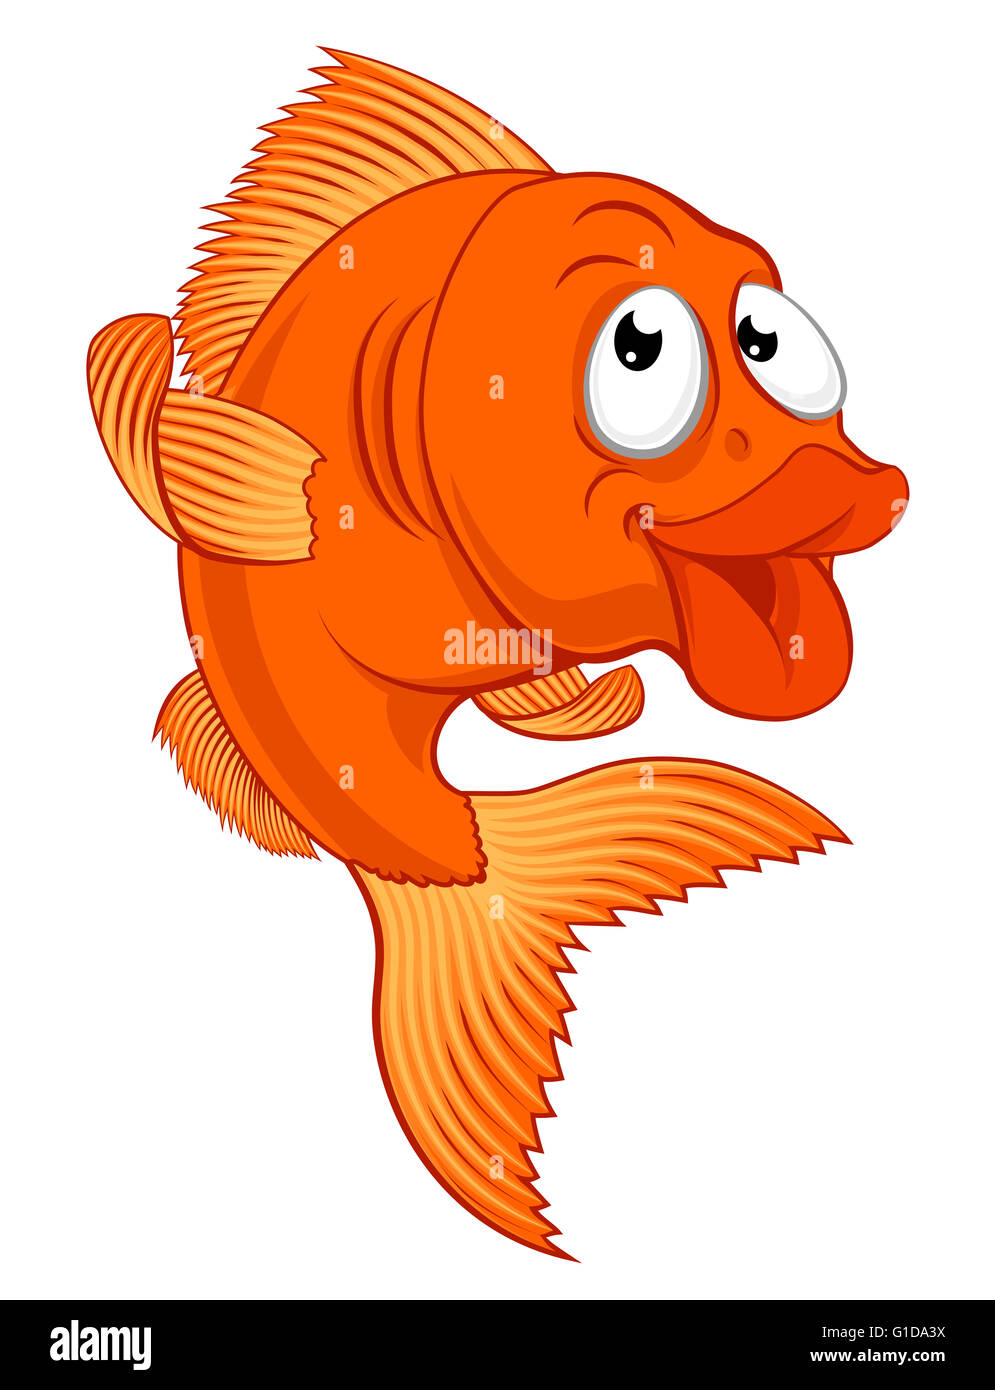 A friendly cartoon gold fish or gold fish character Stock Photo